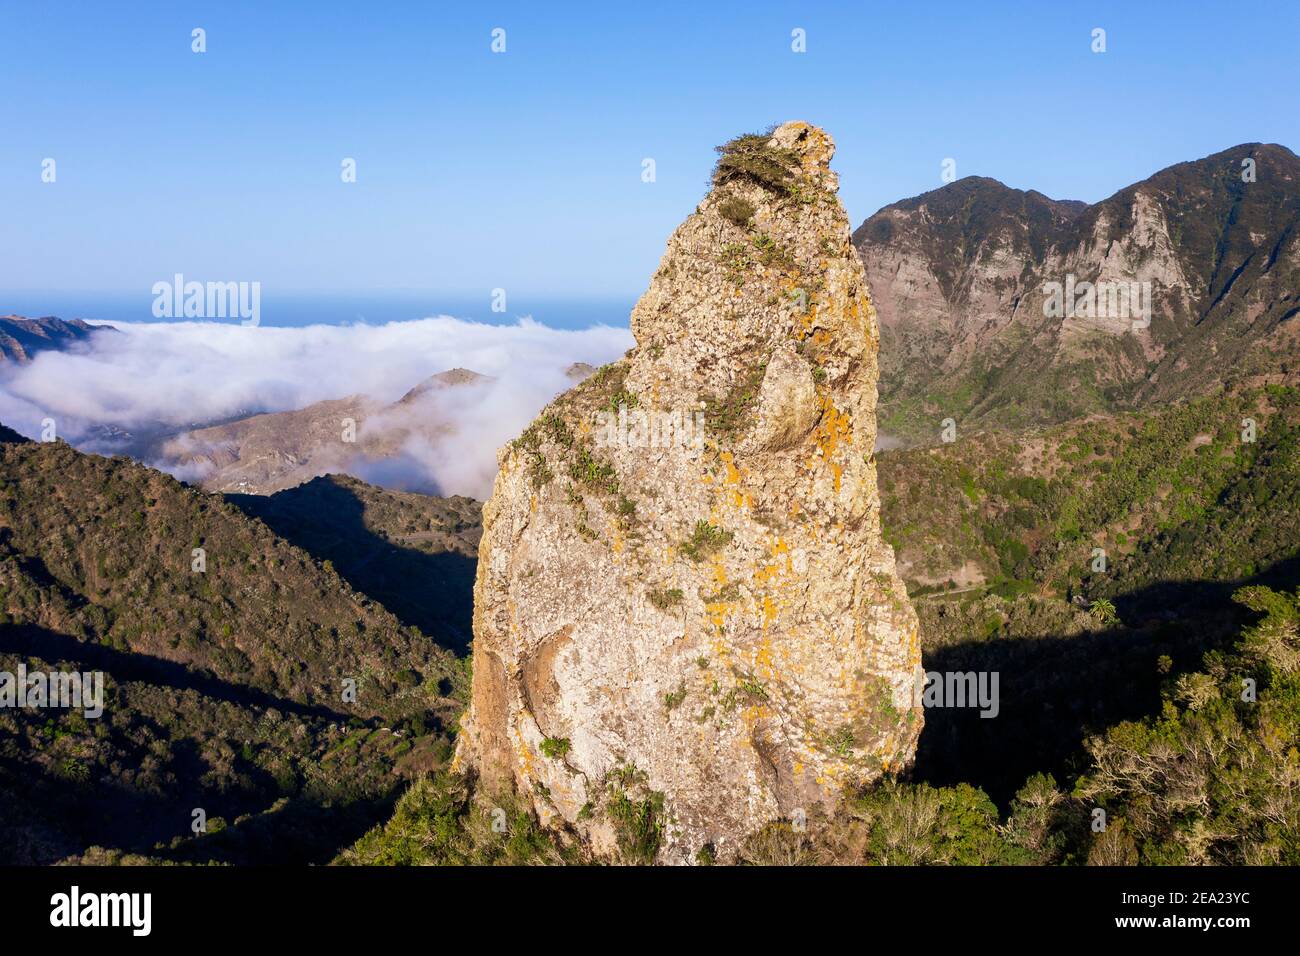 Rock needle Espigon de Ibosa, Garajonay National Park, near Hermigua, La Gomera, Canary Islands, Spain Stock Photo